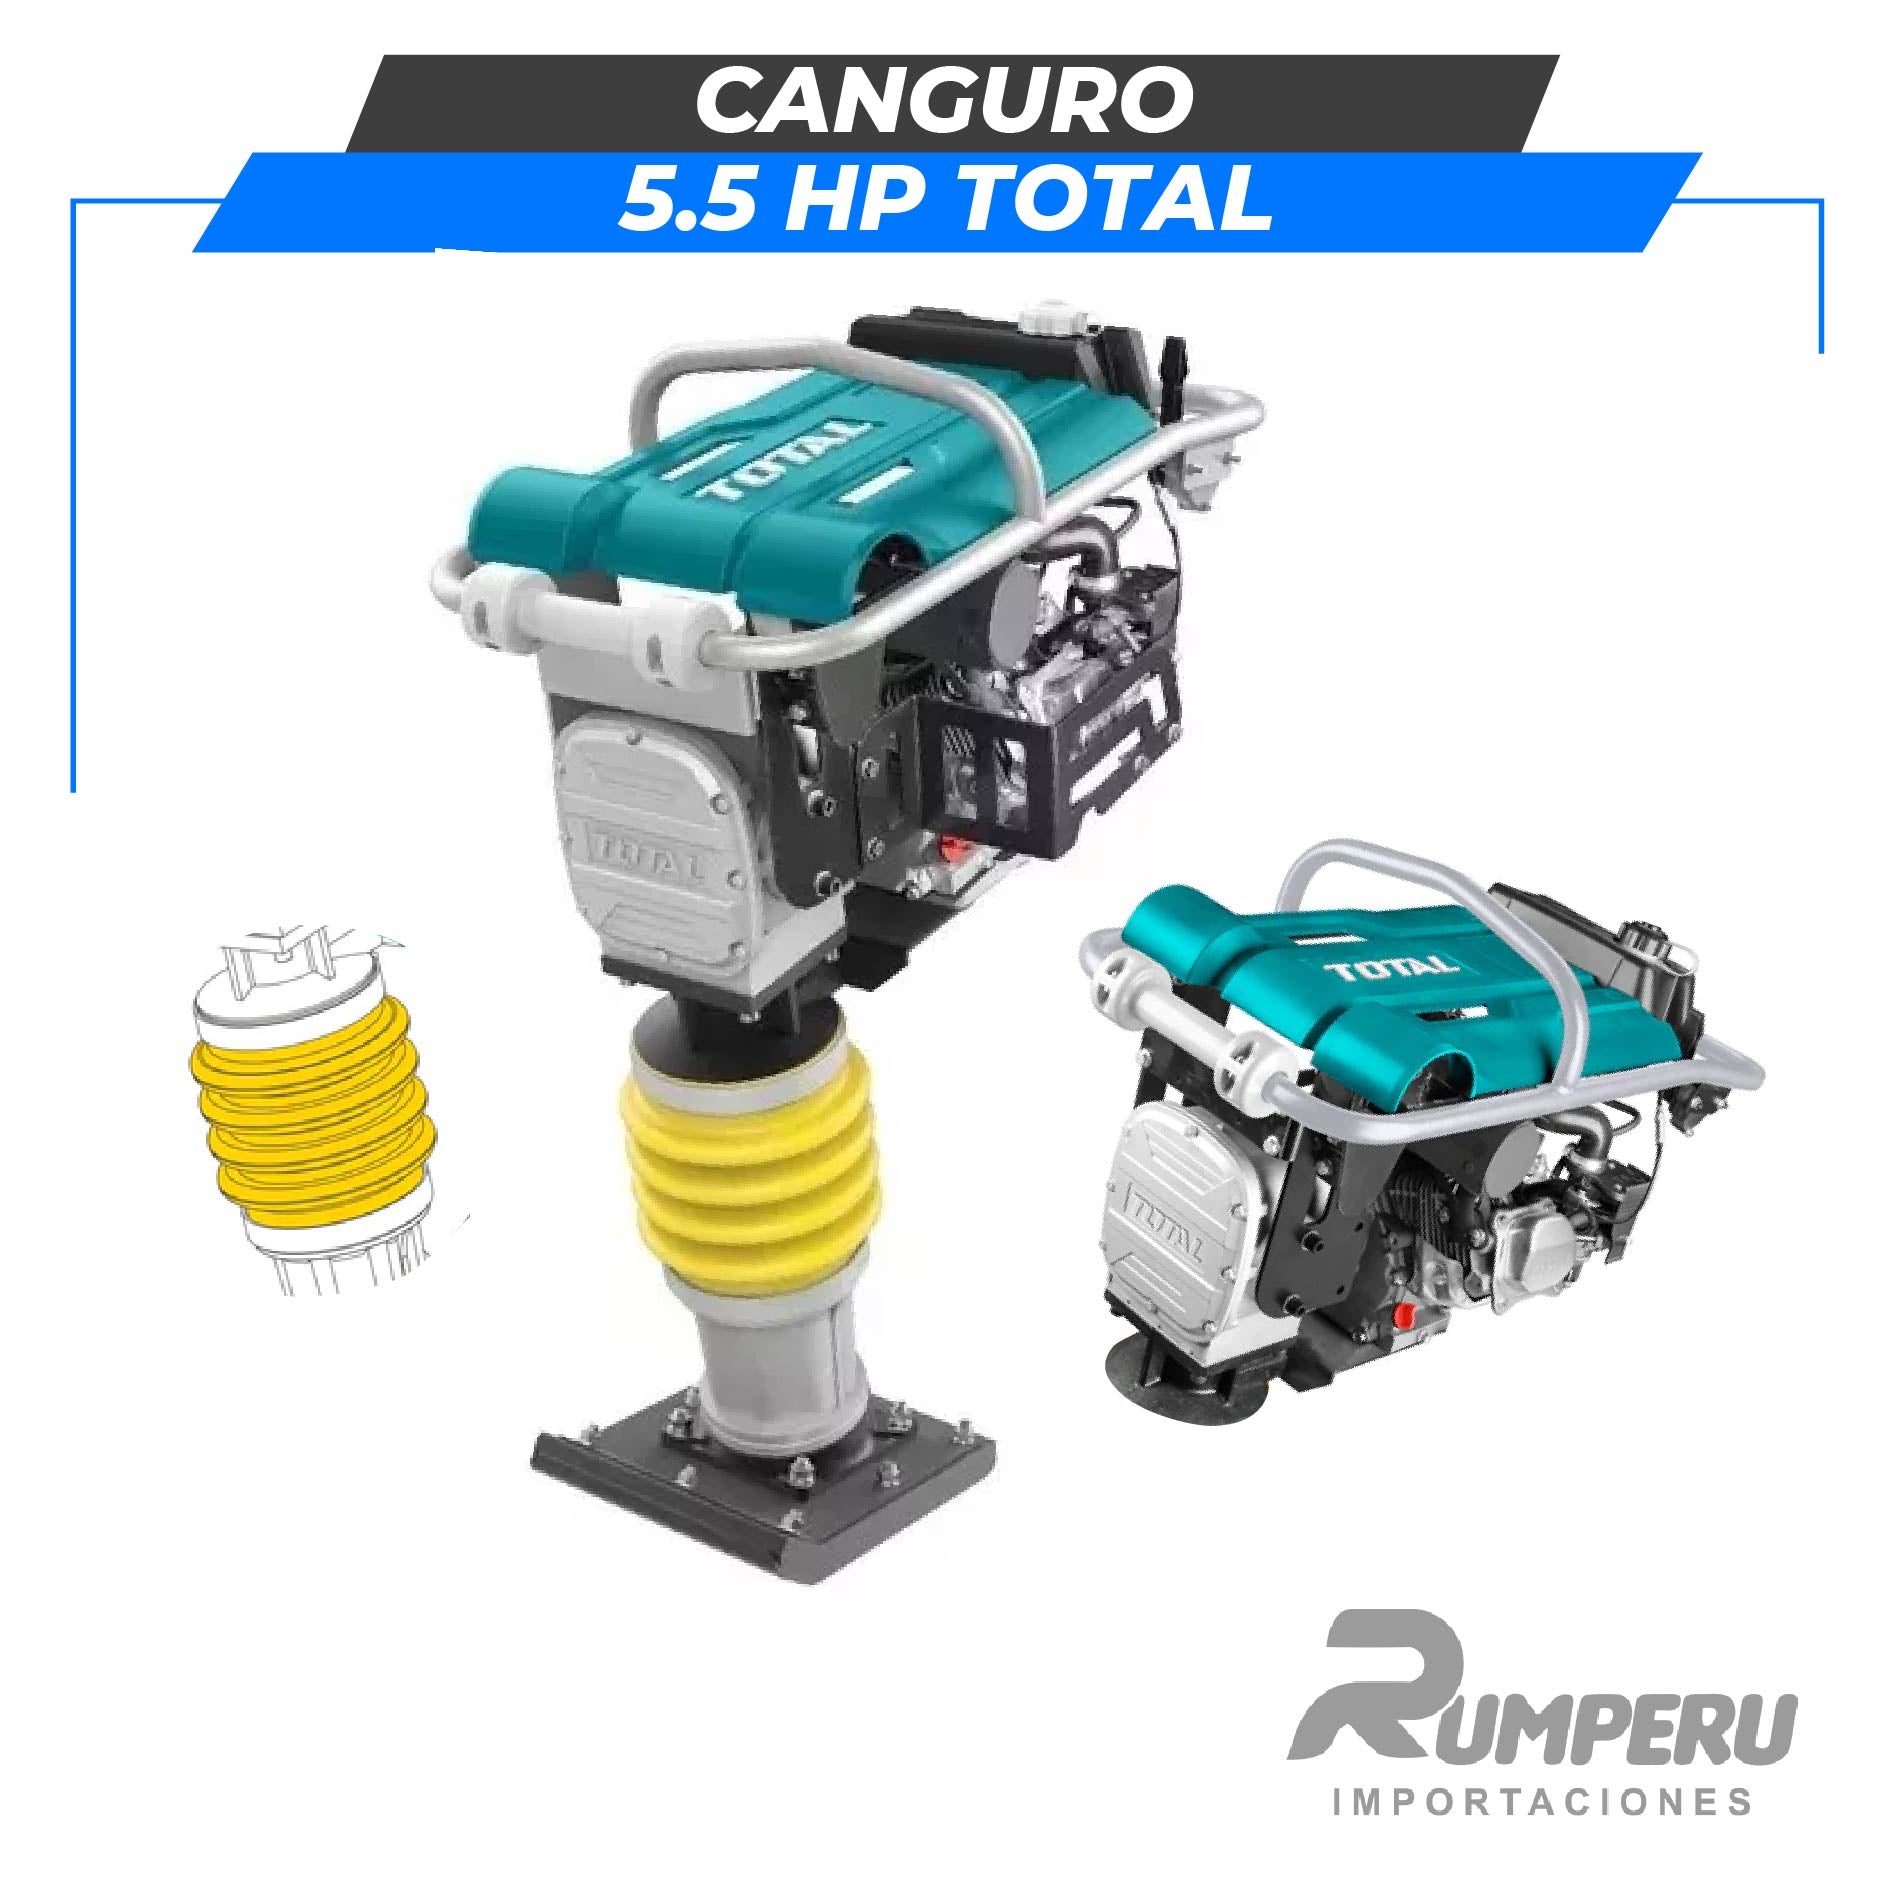 Canguro 5.5 Hp TOTAL